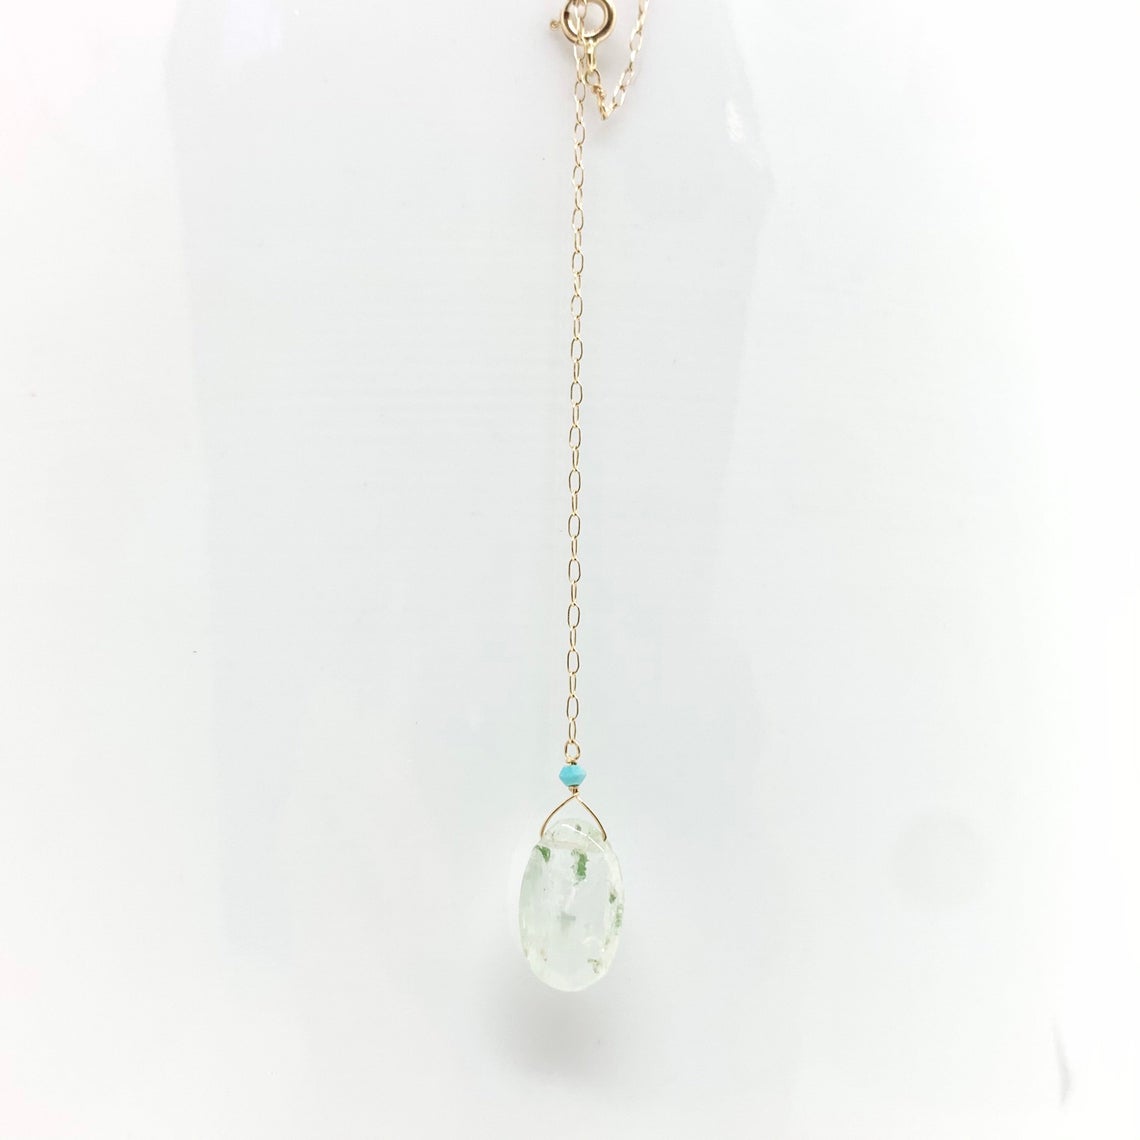 BEADED AFGHANI TURQUOISE NECKLACE - Aqua Bead Necklace - Antique Gemstone Jewelry - Aquamarine Drop Necklace